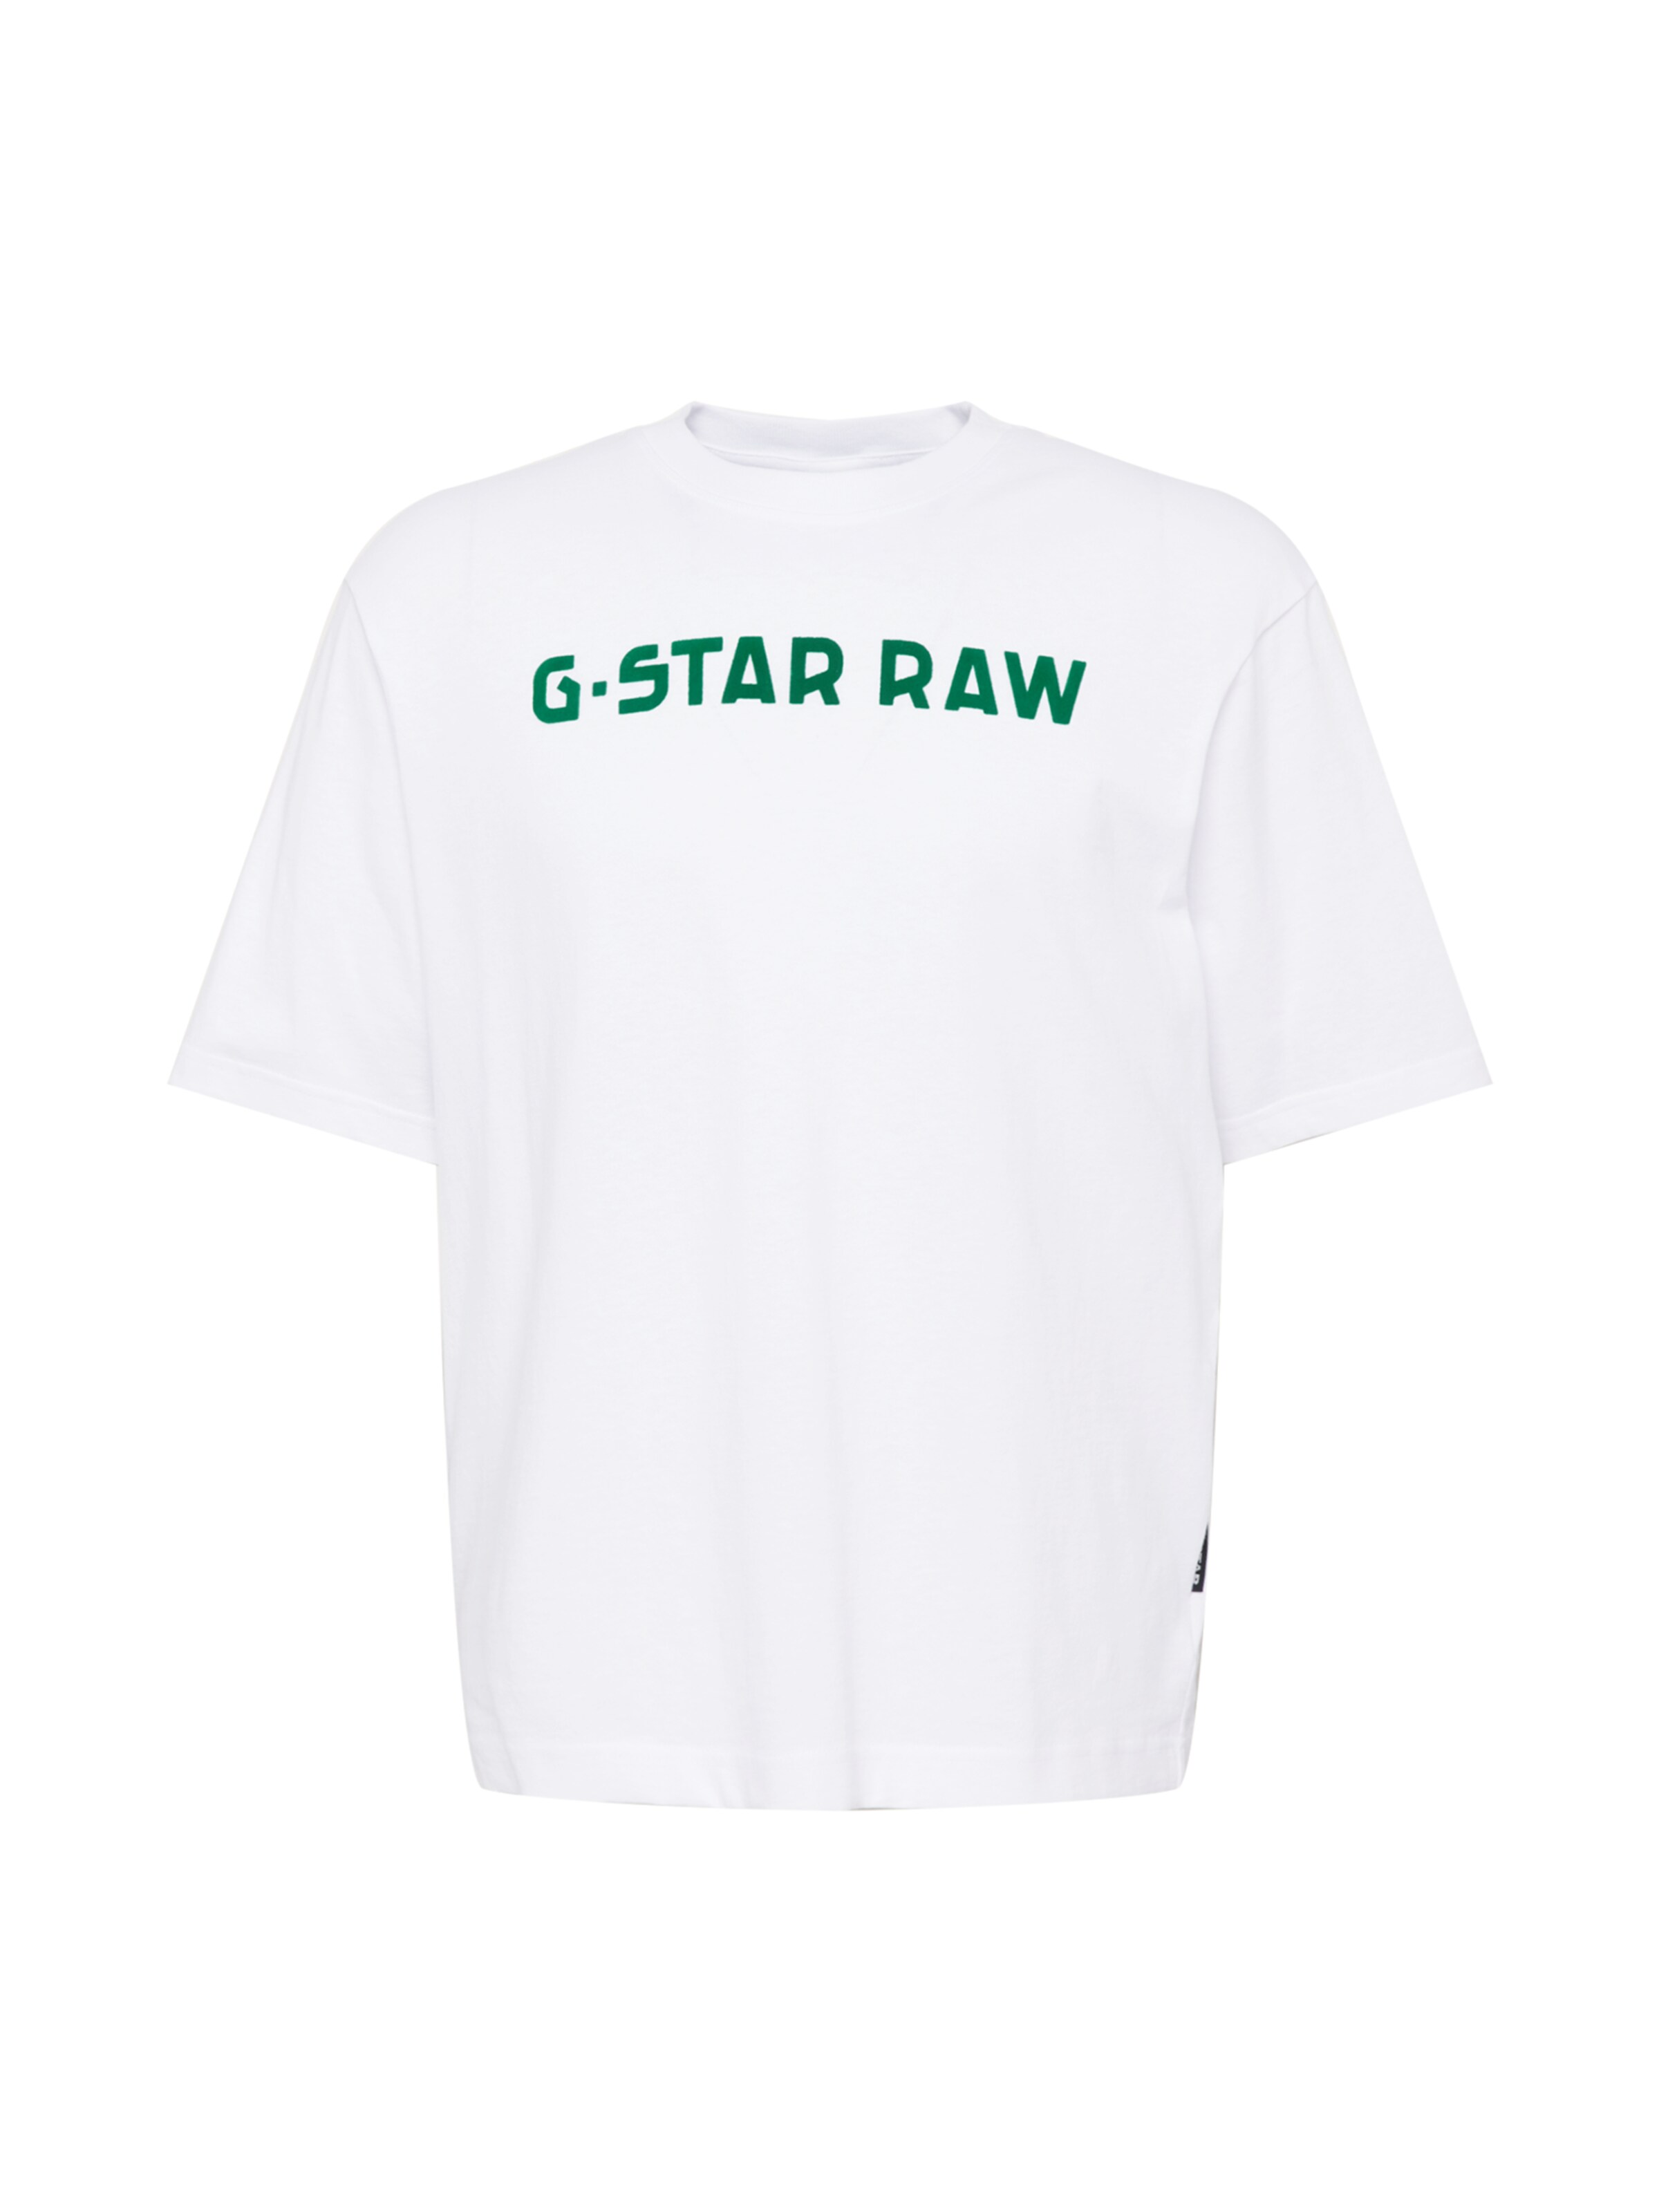 Maglie e T-shirt Uomo G-Star RAW Maglietta flock boxy r t in Bianco 